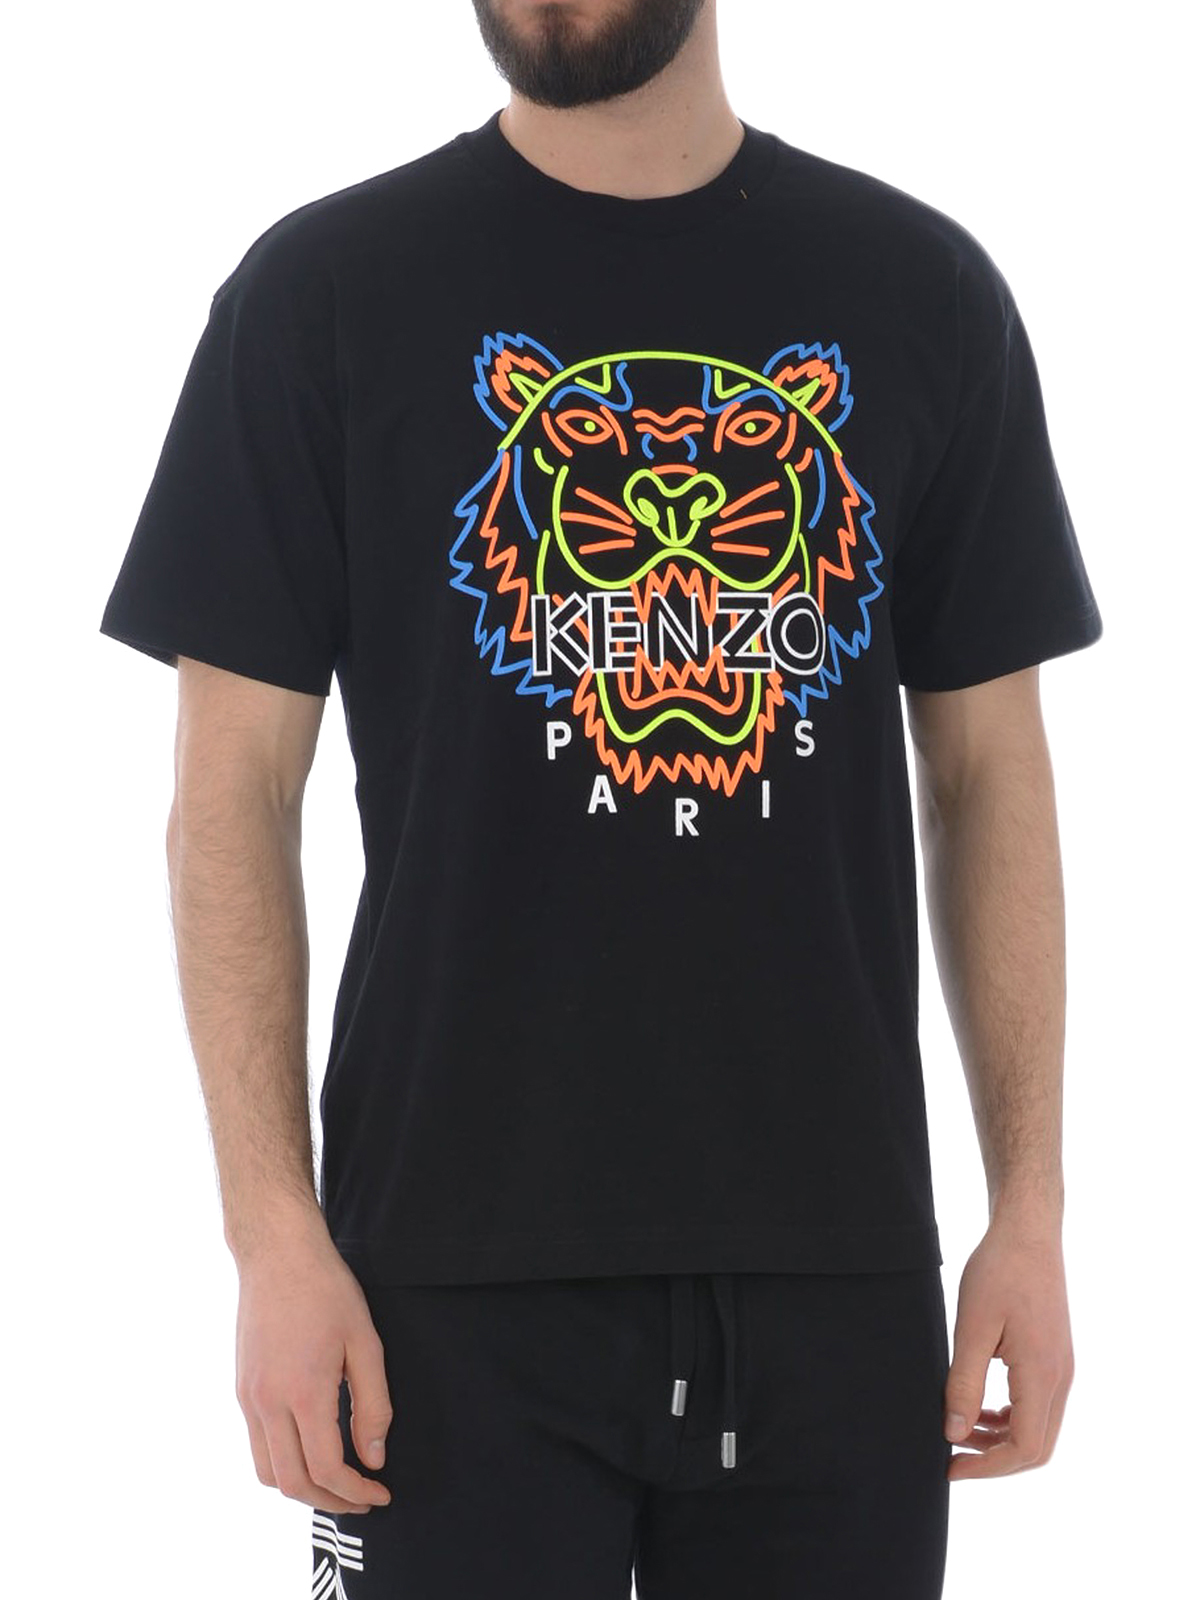 Tシャツ Kenzo - Tシャツ - Tiger - F955TS0394YF99 | iKRIX shop online